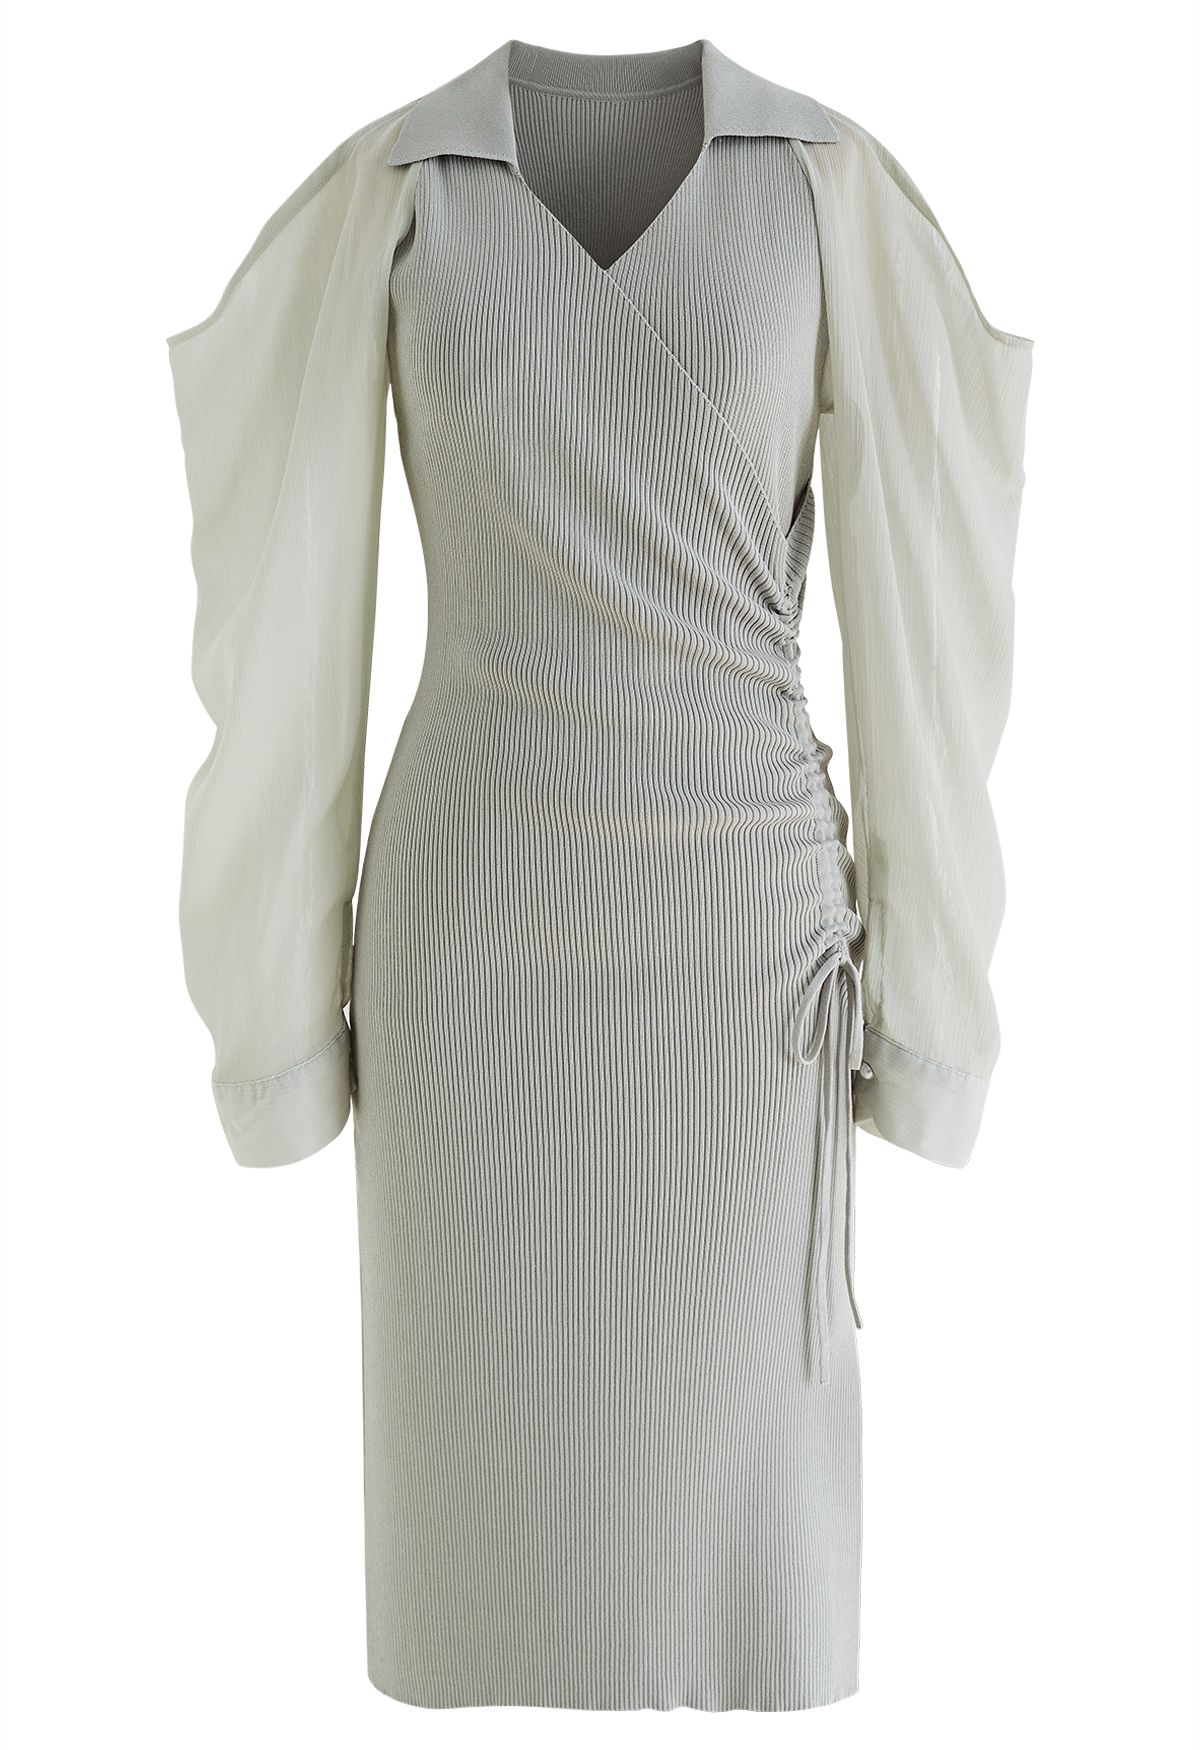 Sheer Sleeve Cold-Shoulder Bodycon Knit Dress in Sage